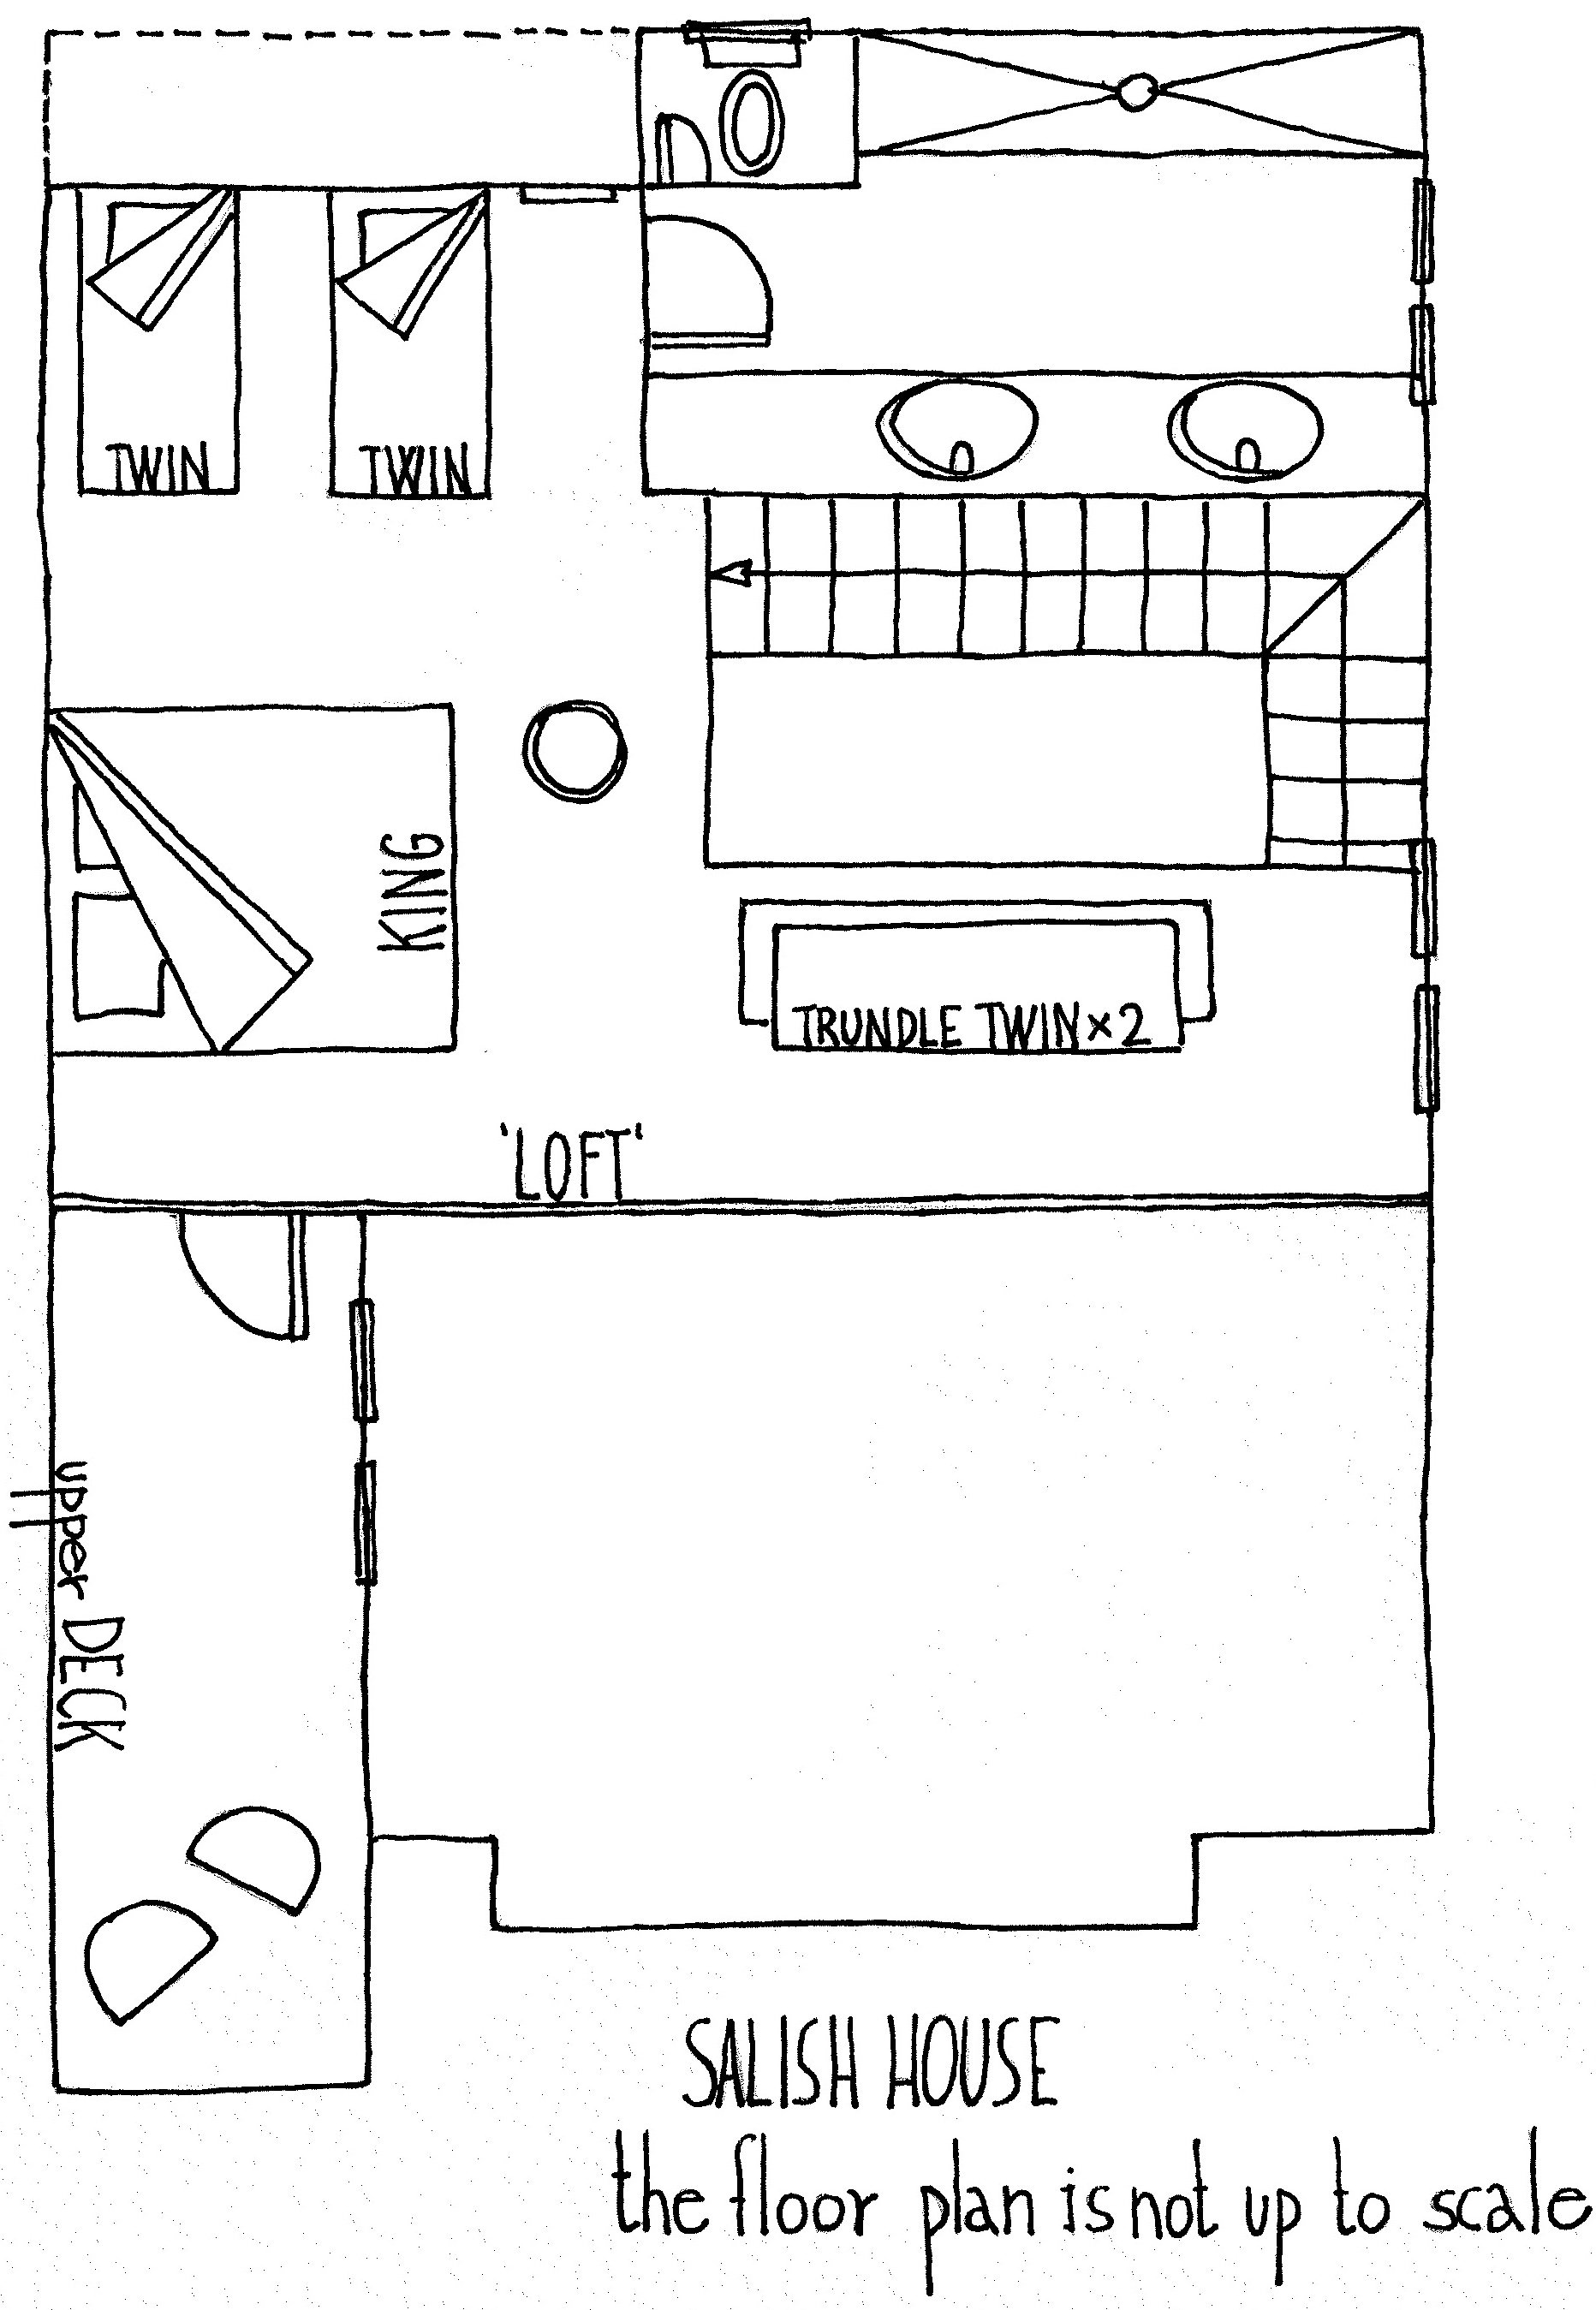 GIR Salish House Upper Level Floorplan.jpg